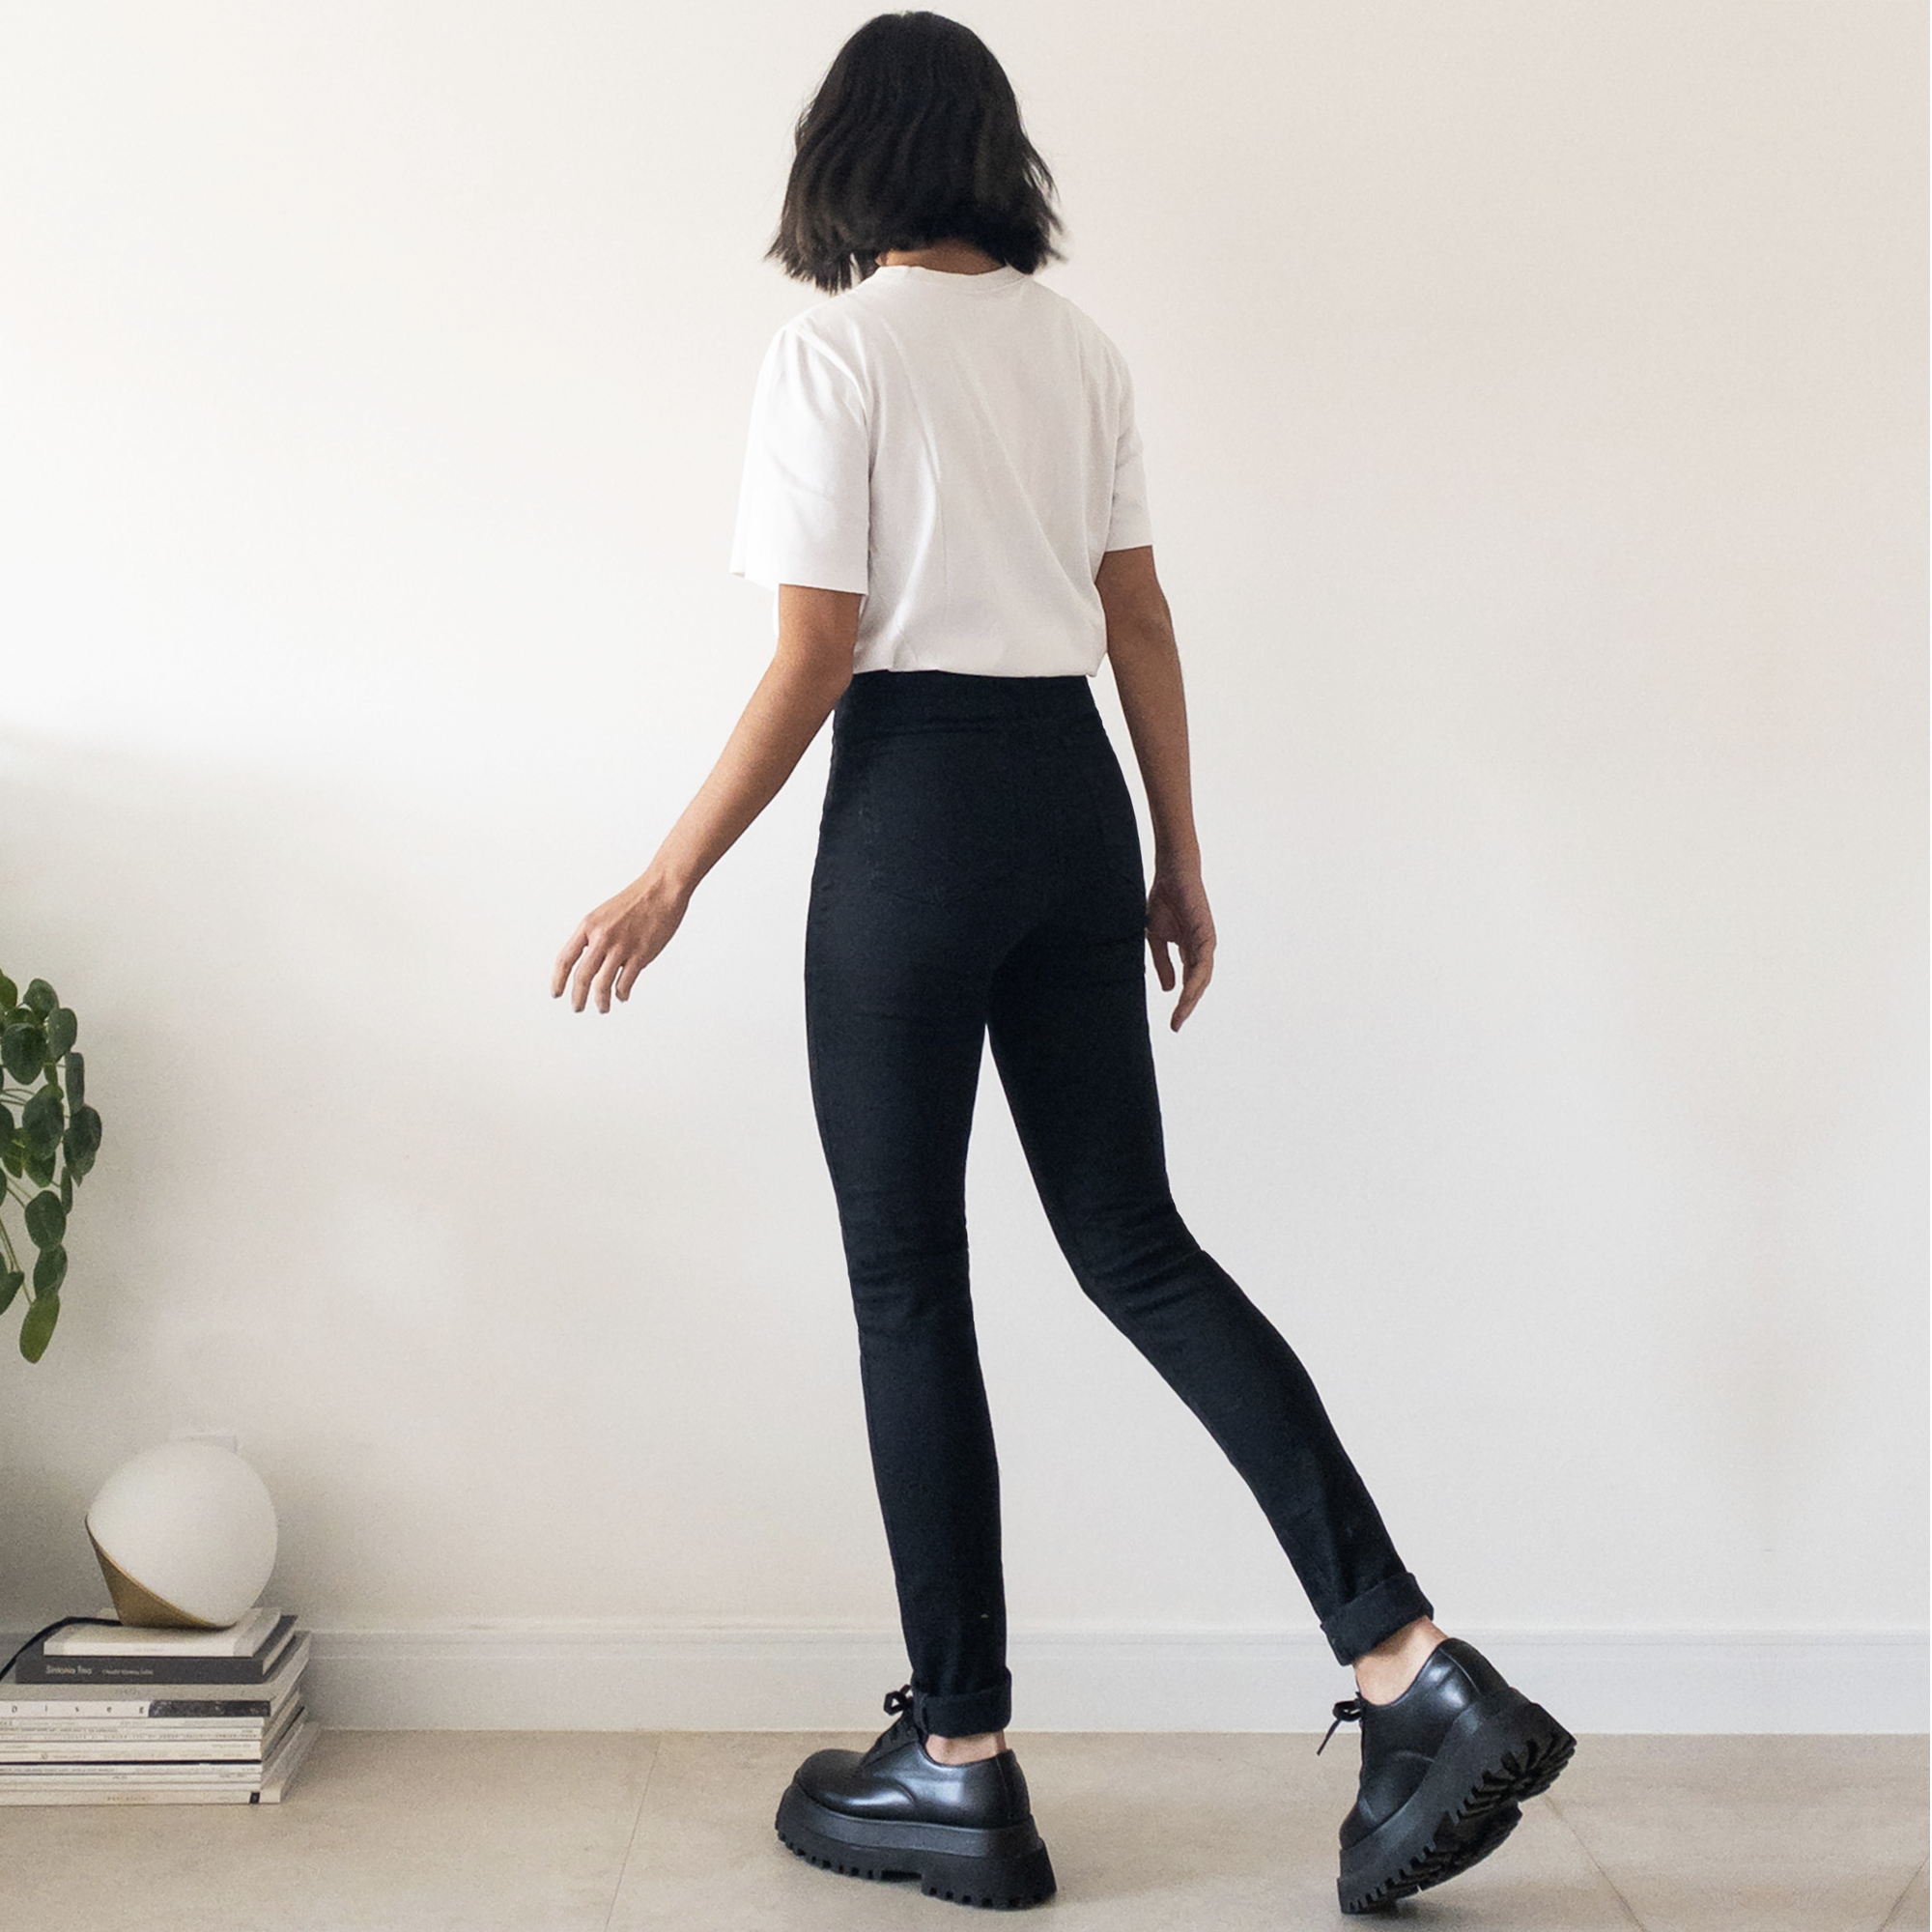 Skinny Jeans Cintura Alta e Bumbum Up | Cassandra Black